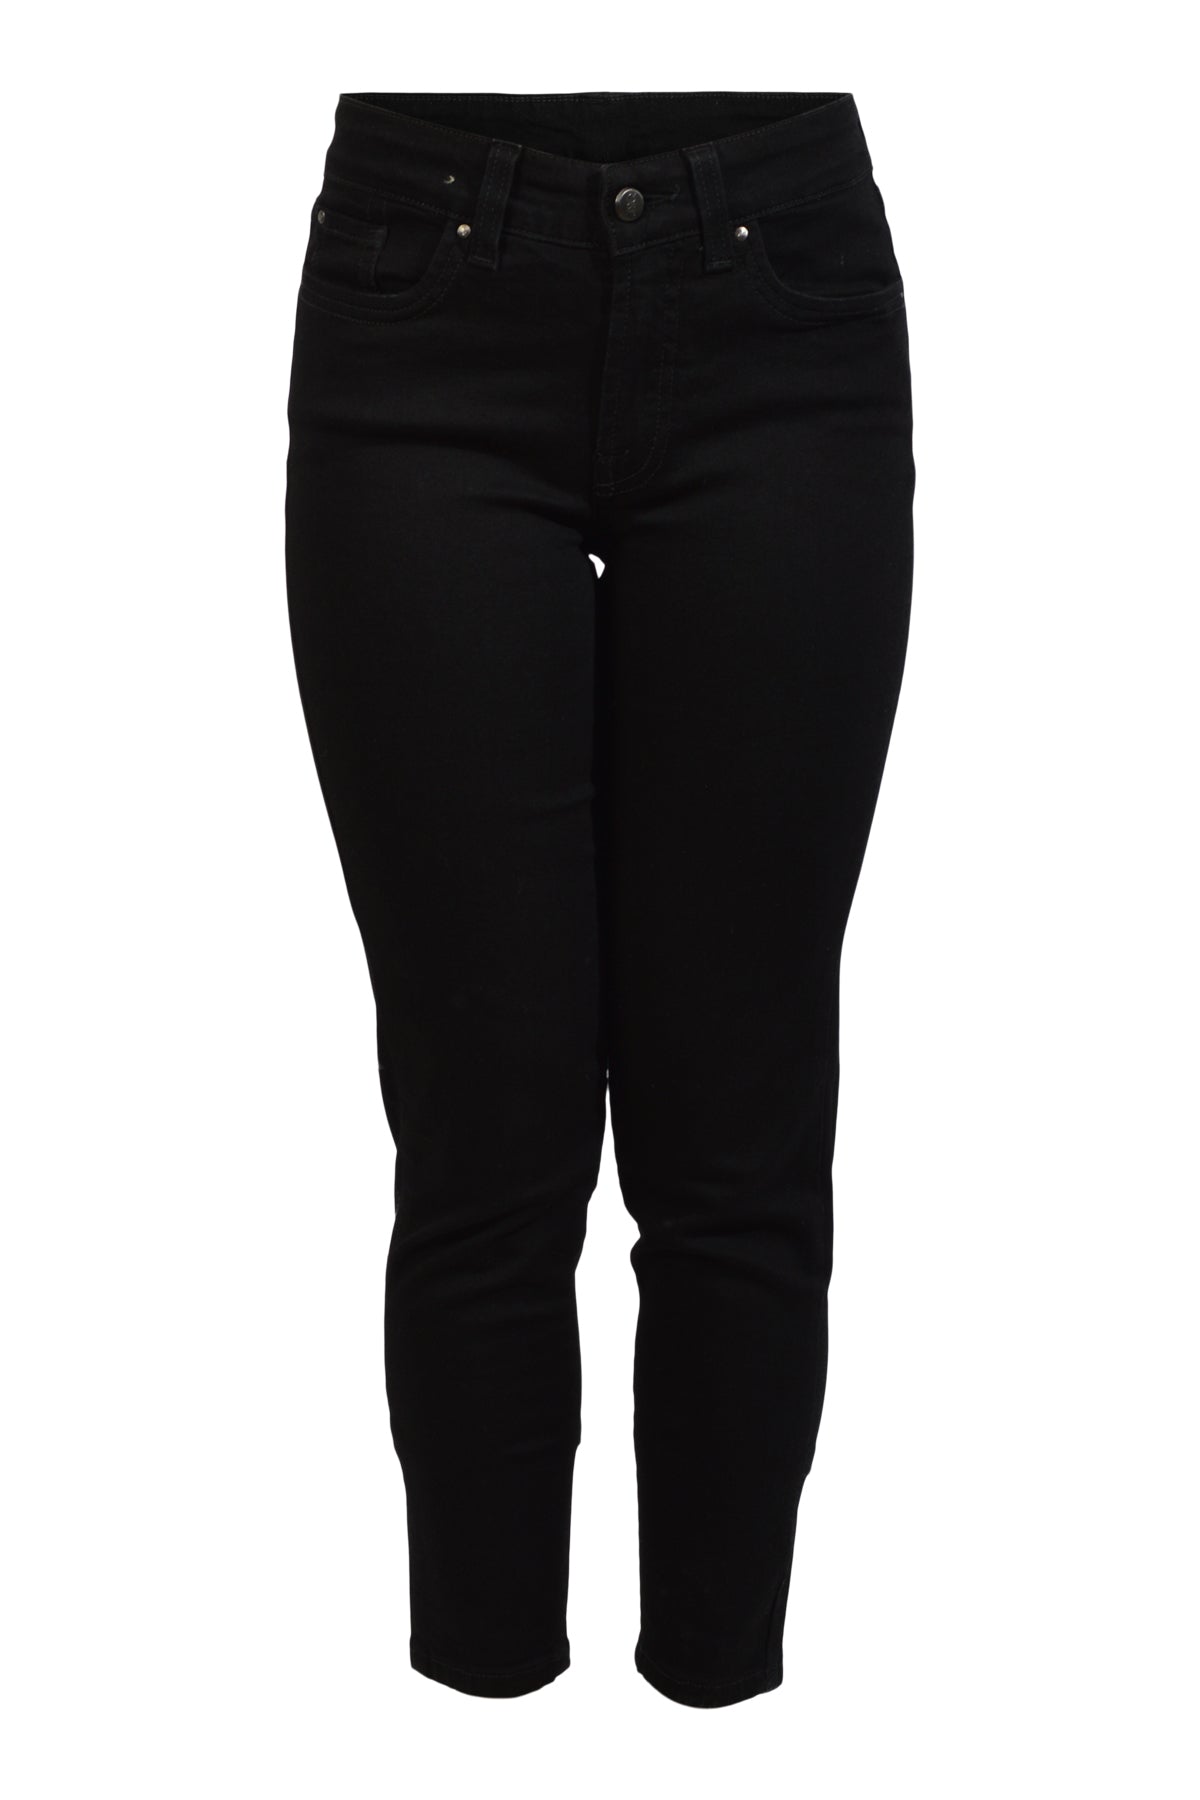 JONNY Q jeans P1161AC Jacky x-fit, Sample (Black)